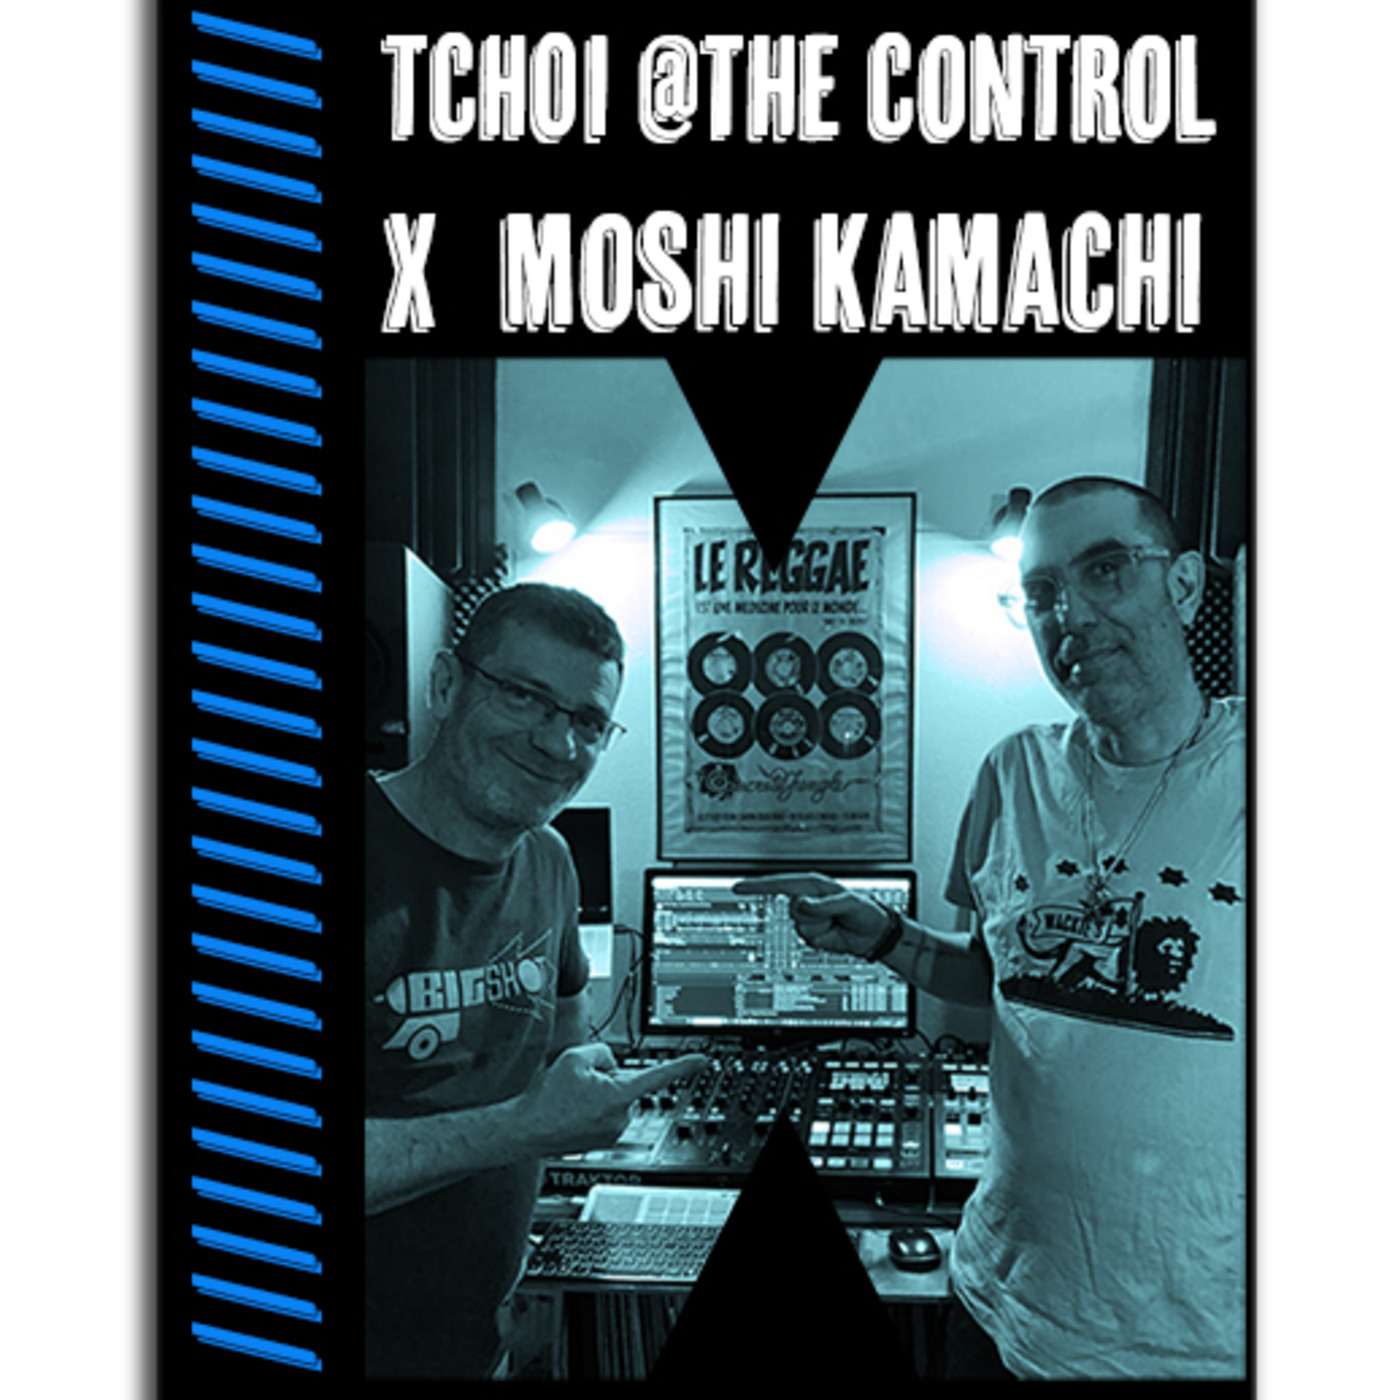 Moshi Kamachi x Tchoi_at_the_Control - Push The Limits ep4